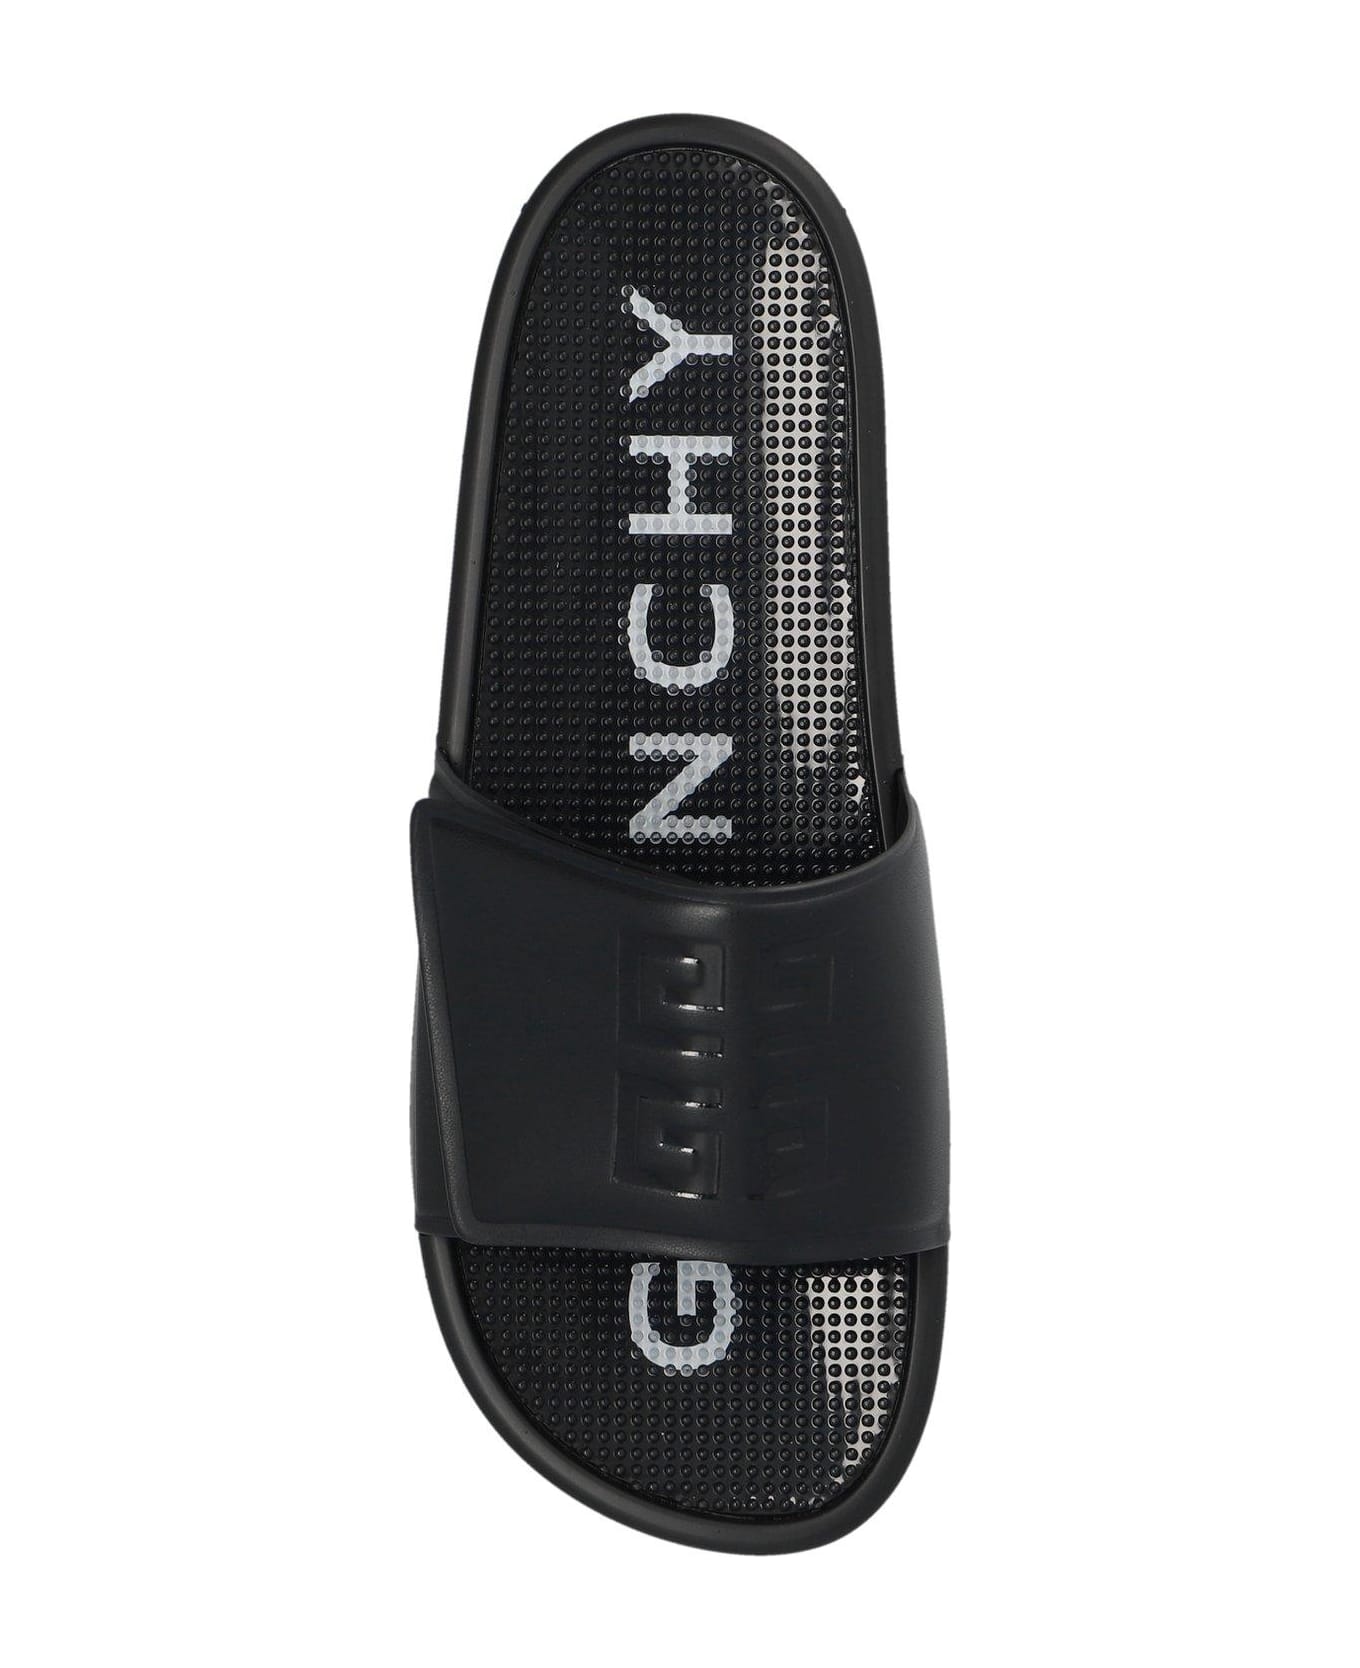 Givenchy 4g Emblem Flat Sandals - White/Black